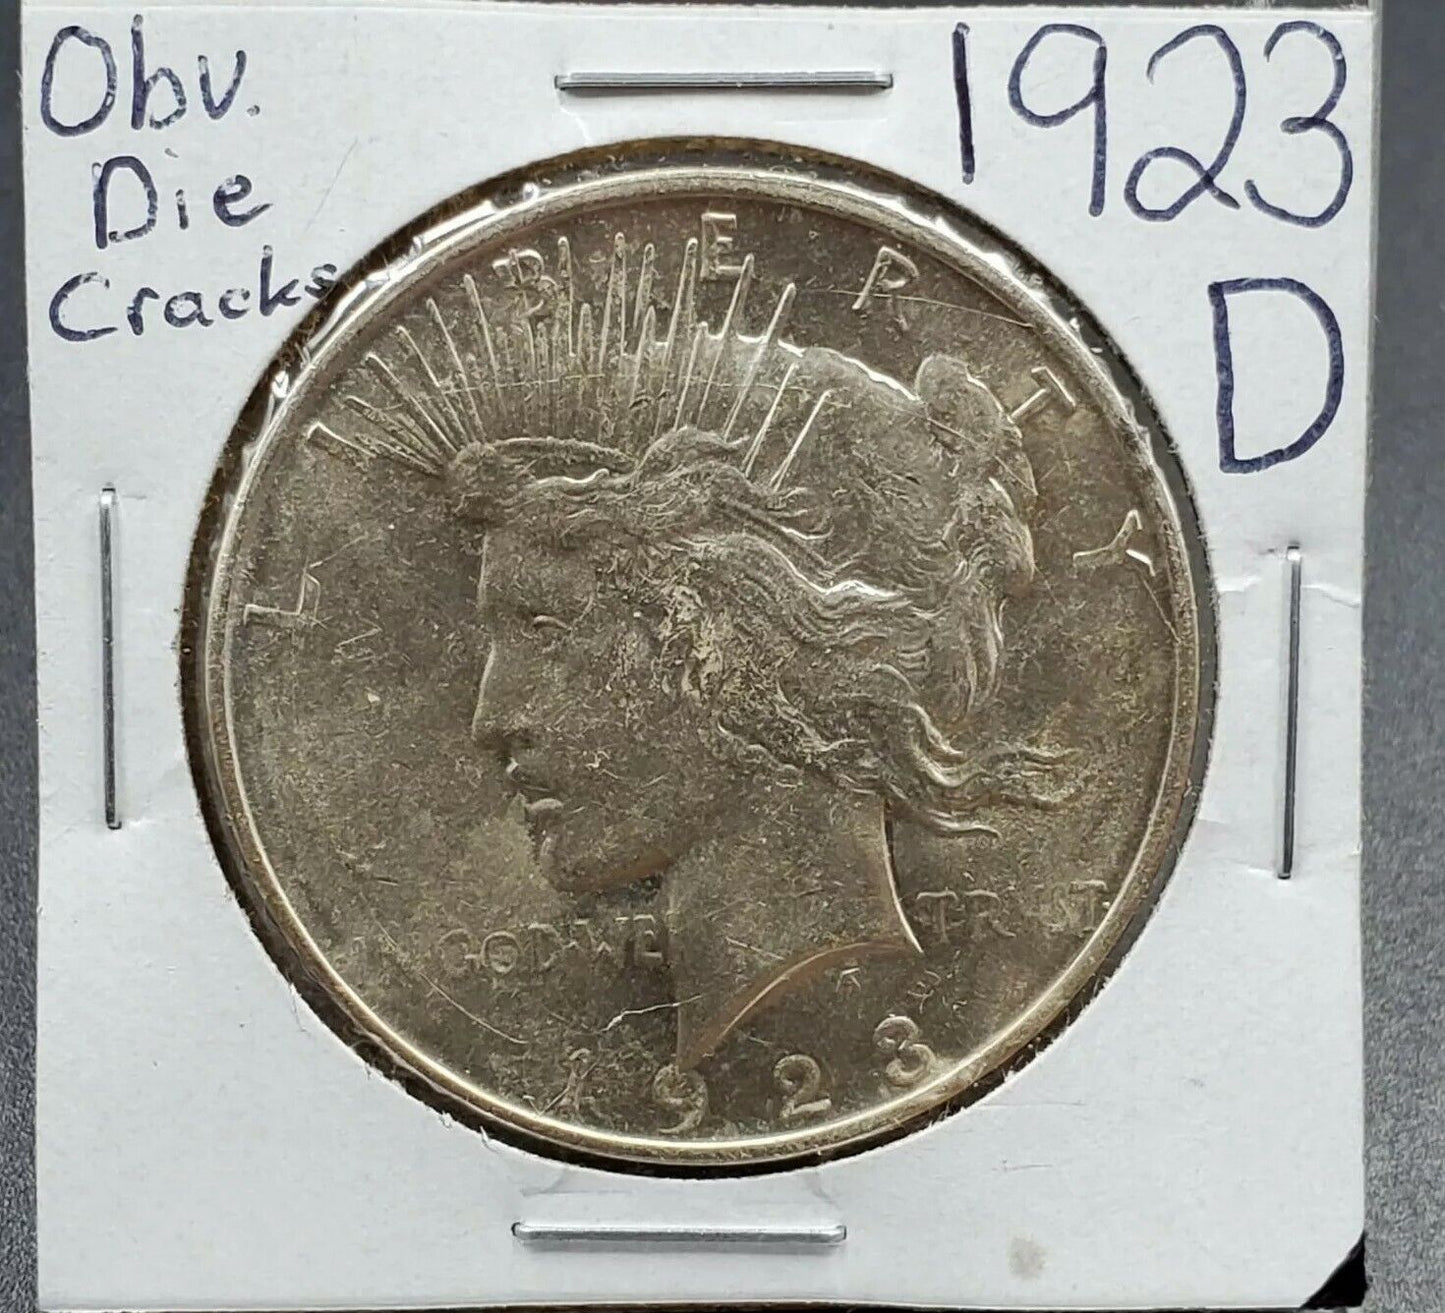 1923 D $1 Peace Silver Eagle Dollar Coin OBV Die Cracks Vam Variety AU Details